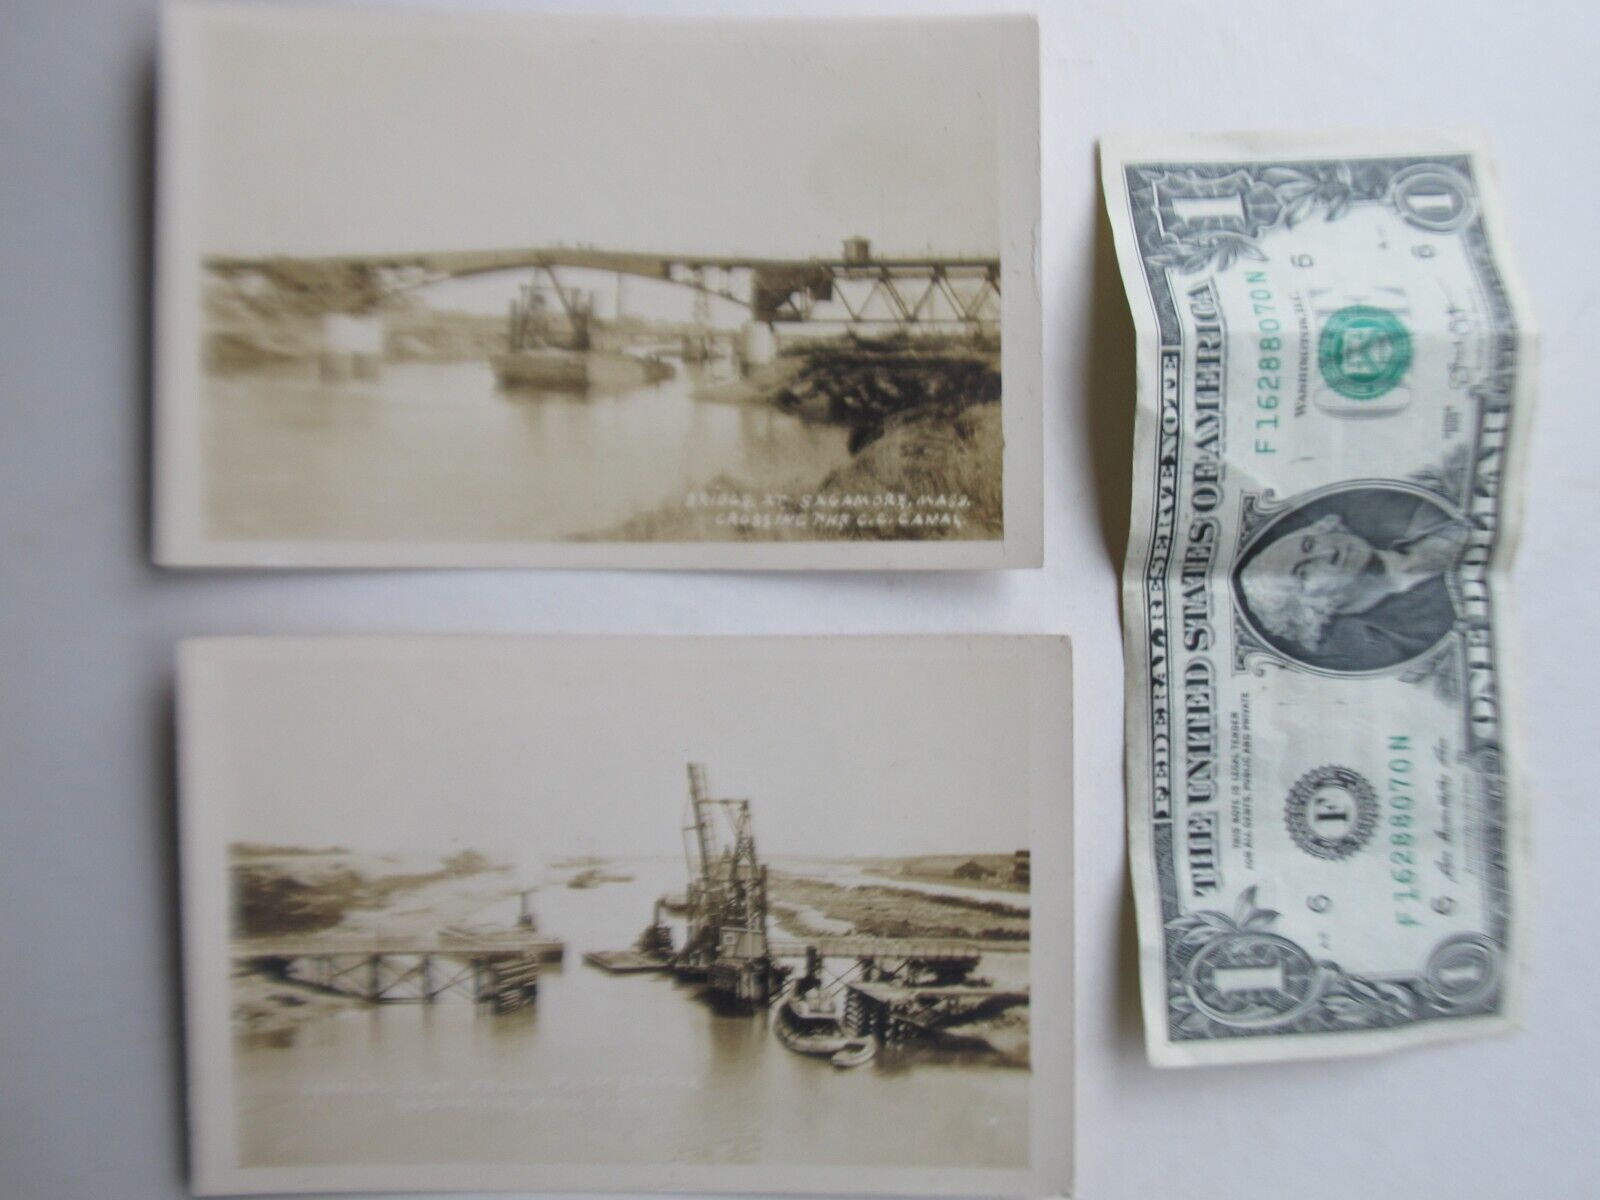 2 RARE Antique 1900 CAPE COD Canal Sagamore Bridge Real Photo Post Cards